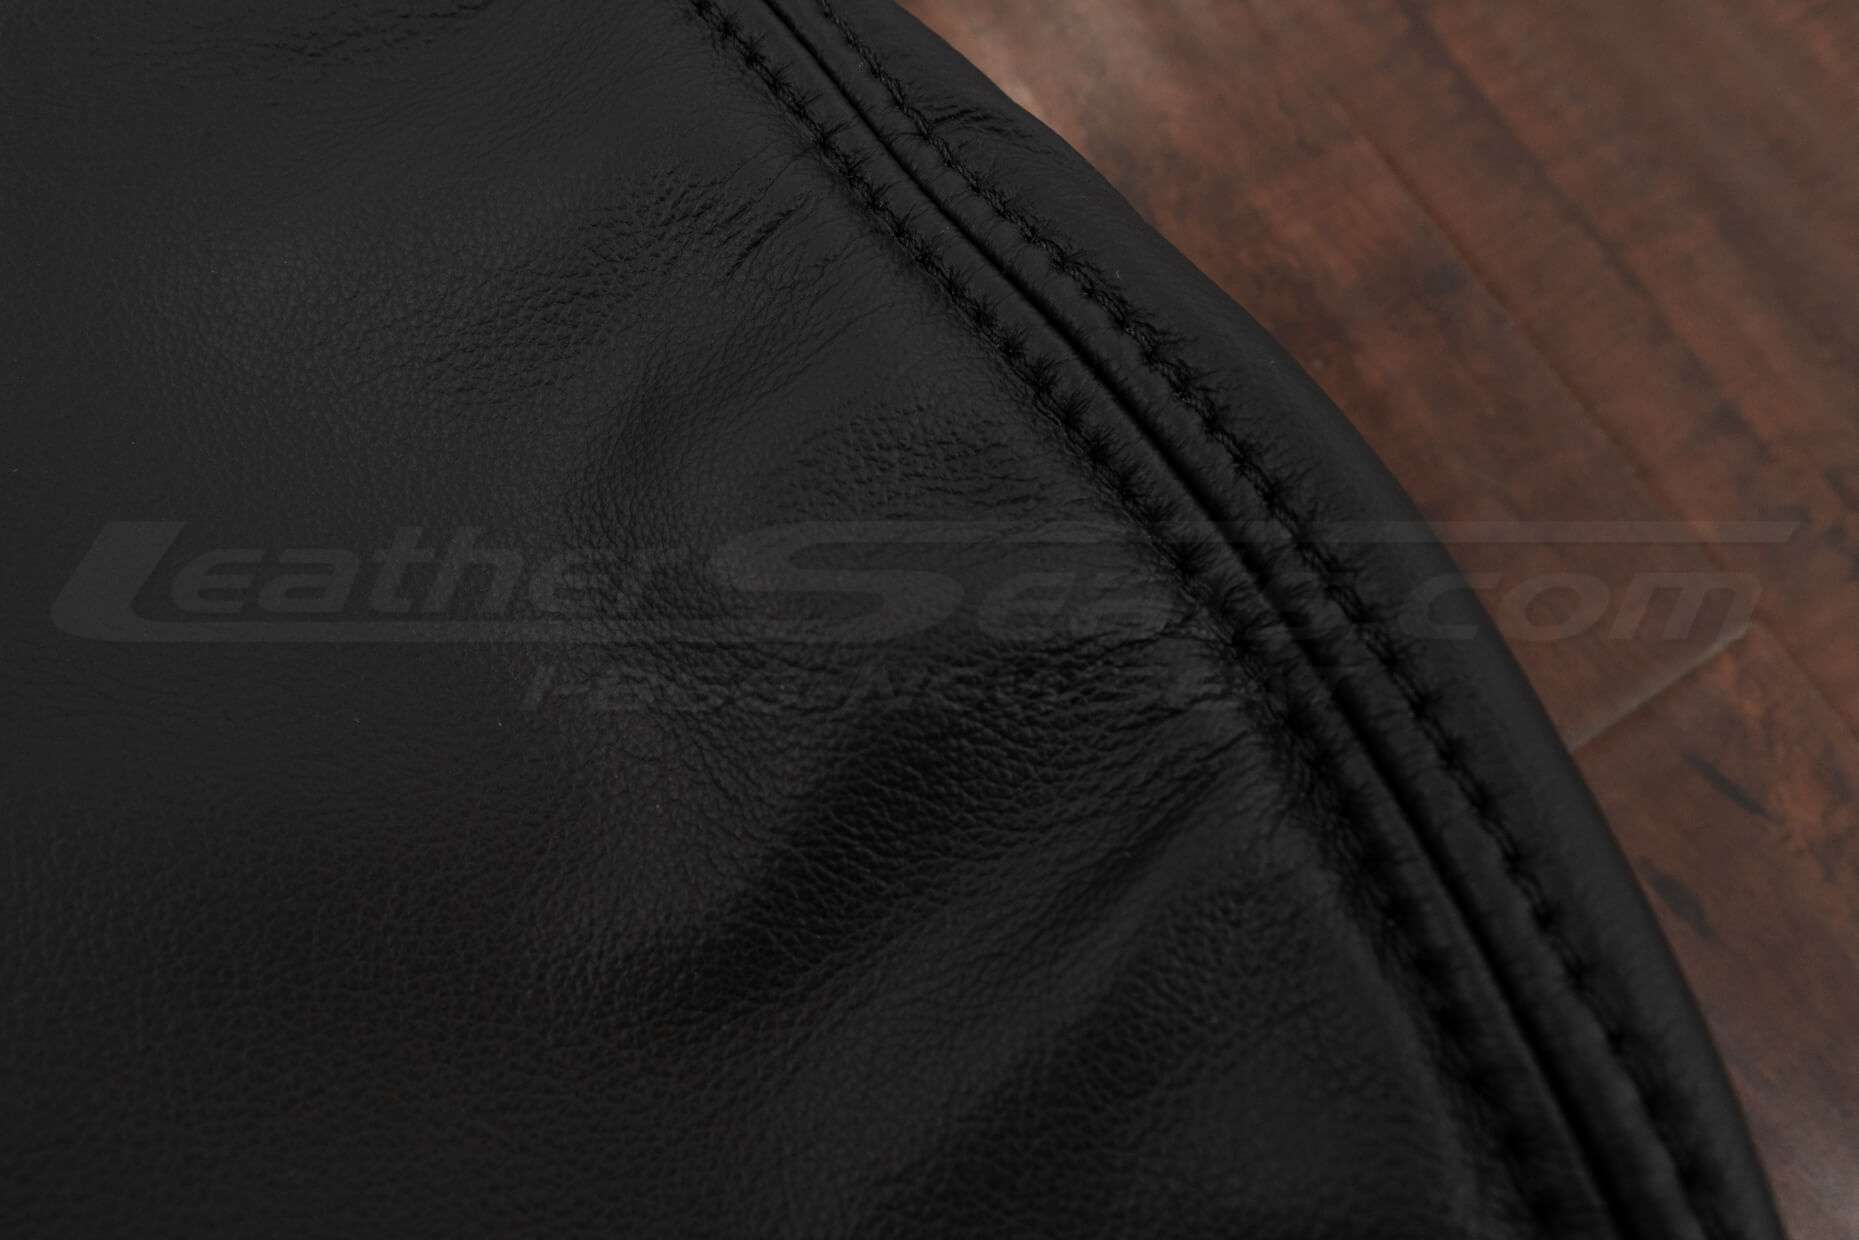 04-06 Pontiac GTO Leather Kit - Ecstasy Black - Matching side double-stitching